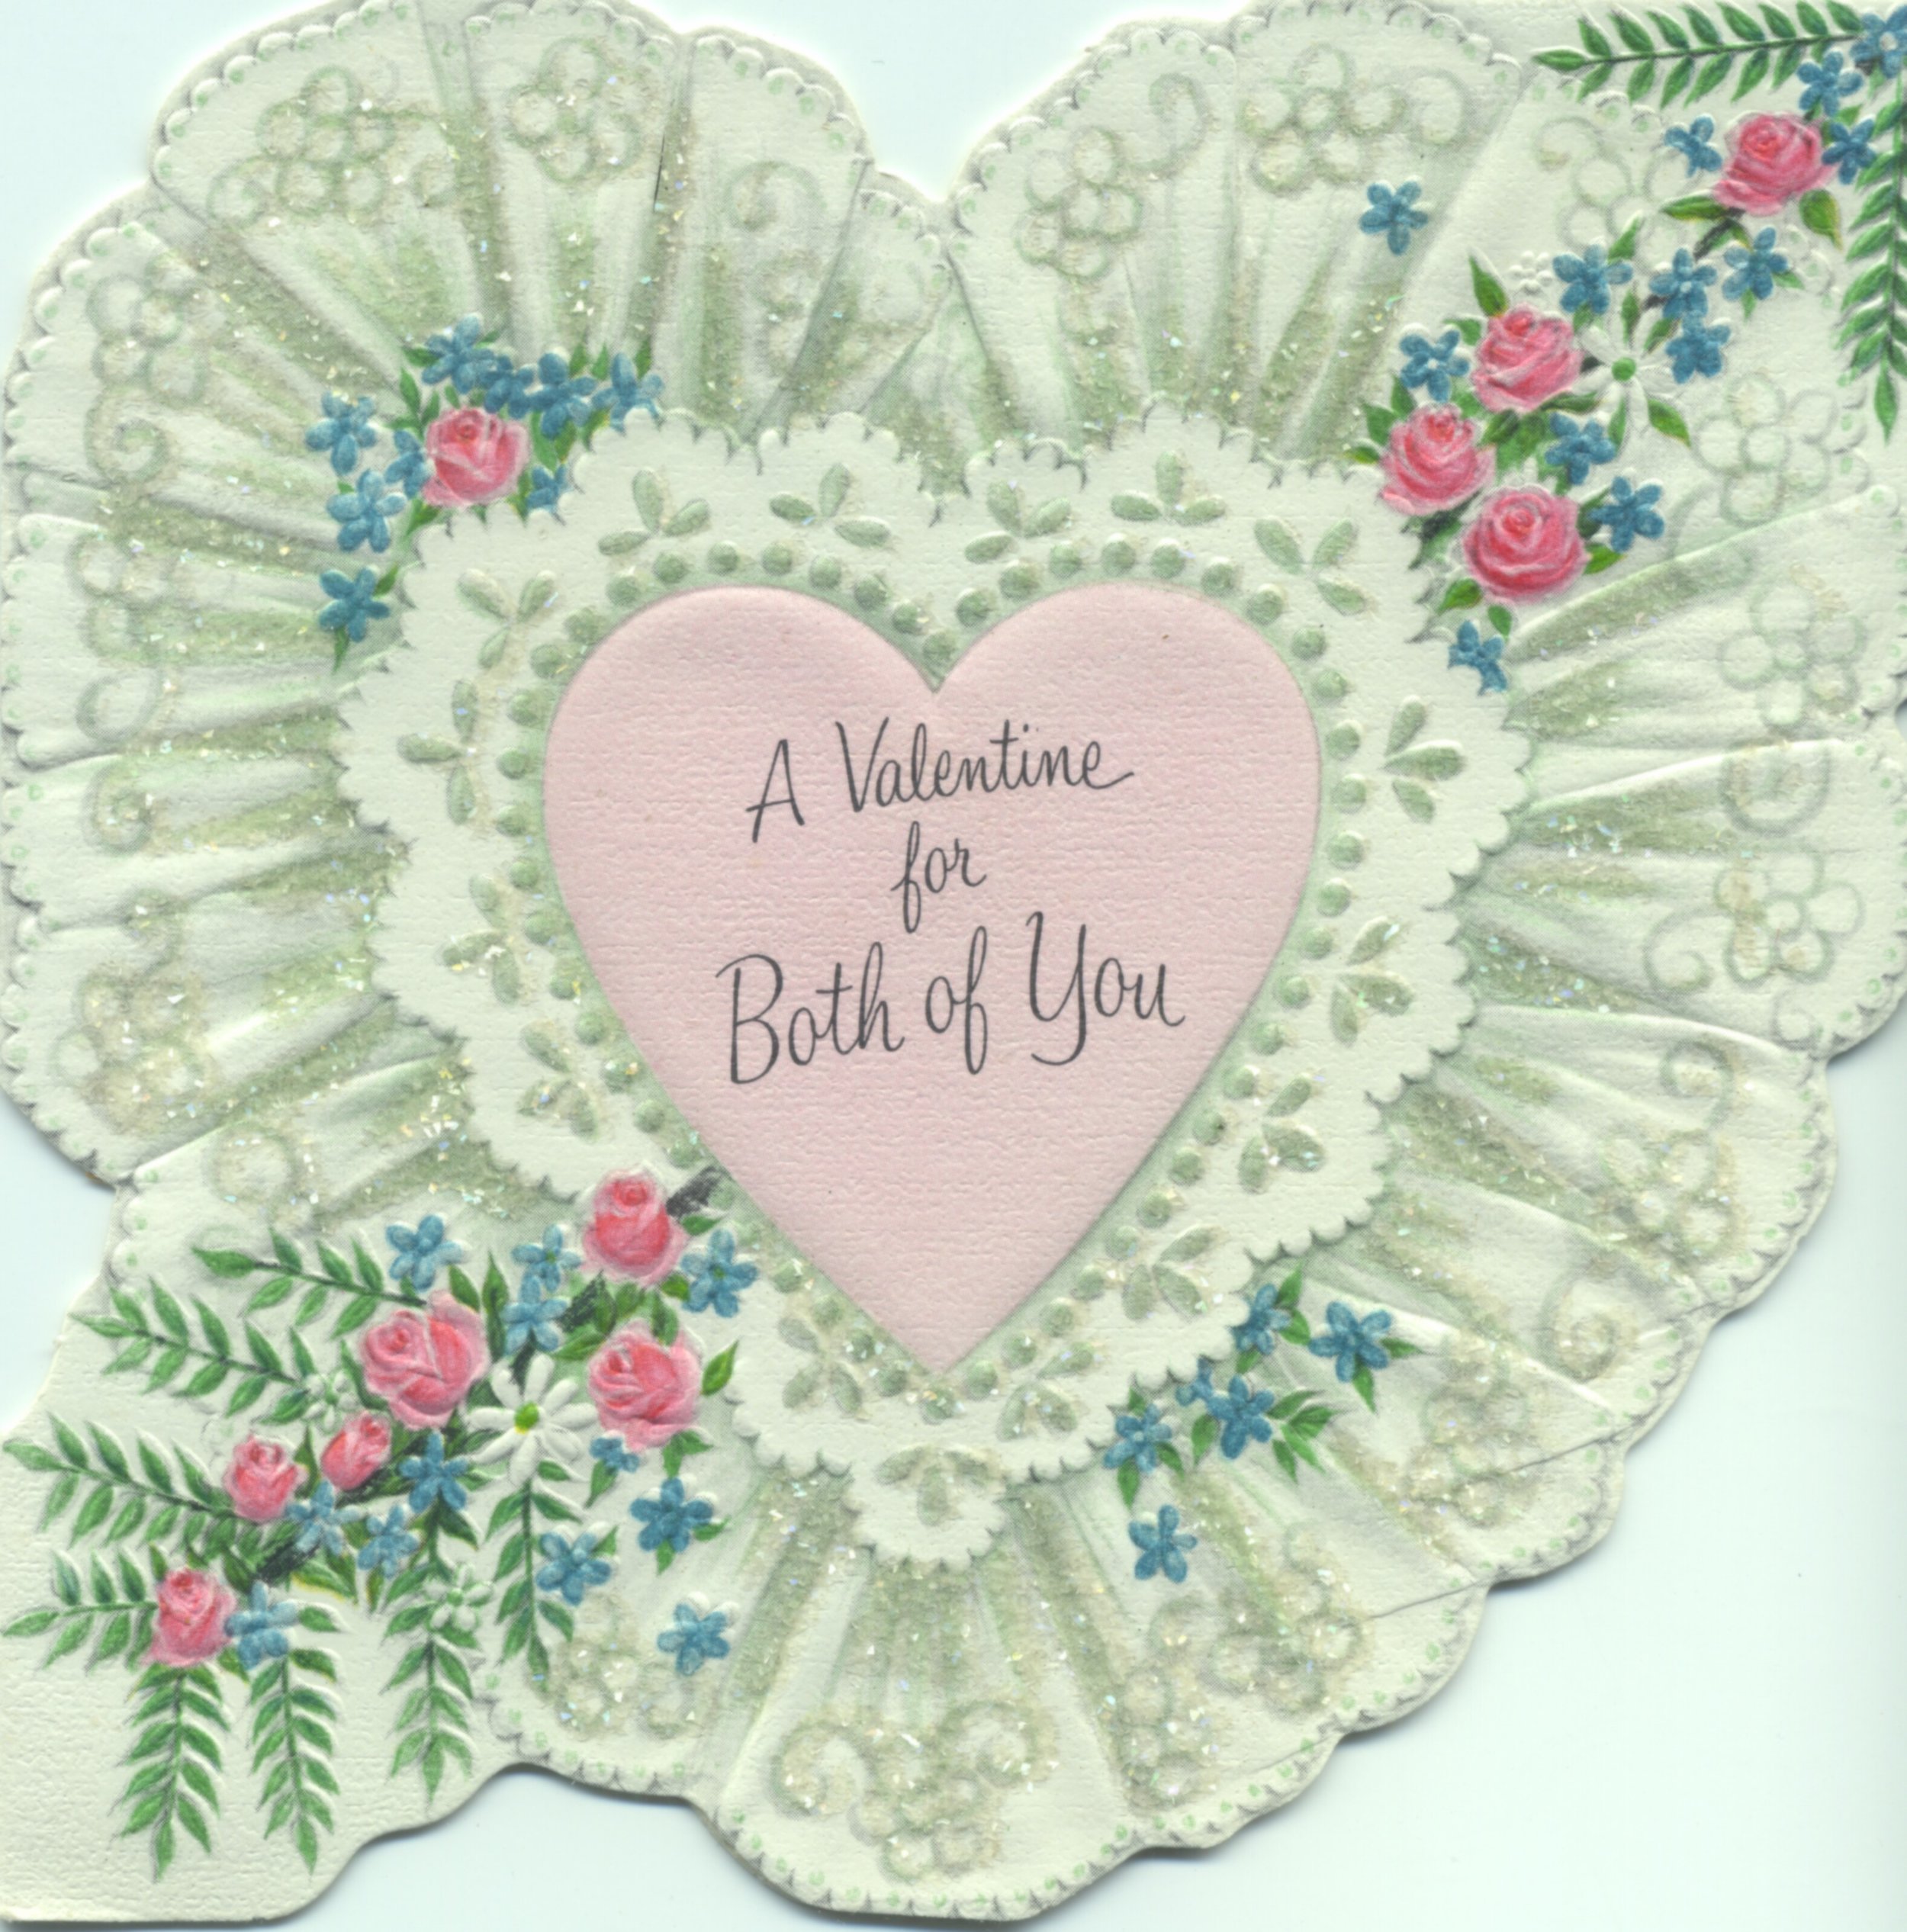 15 Vintage Valentines: Be My Valentine [Book]